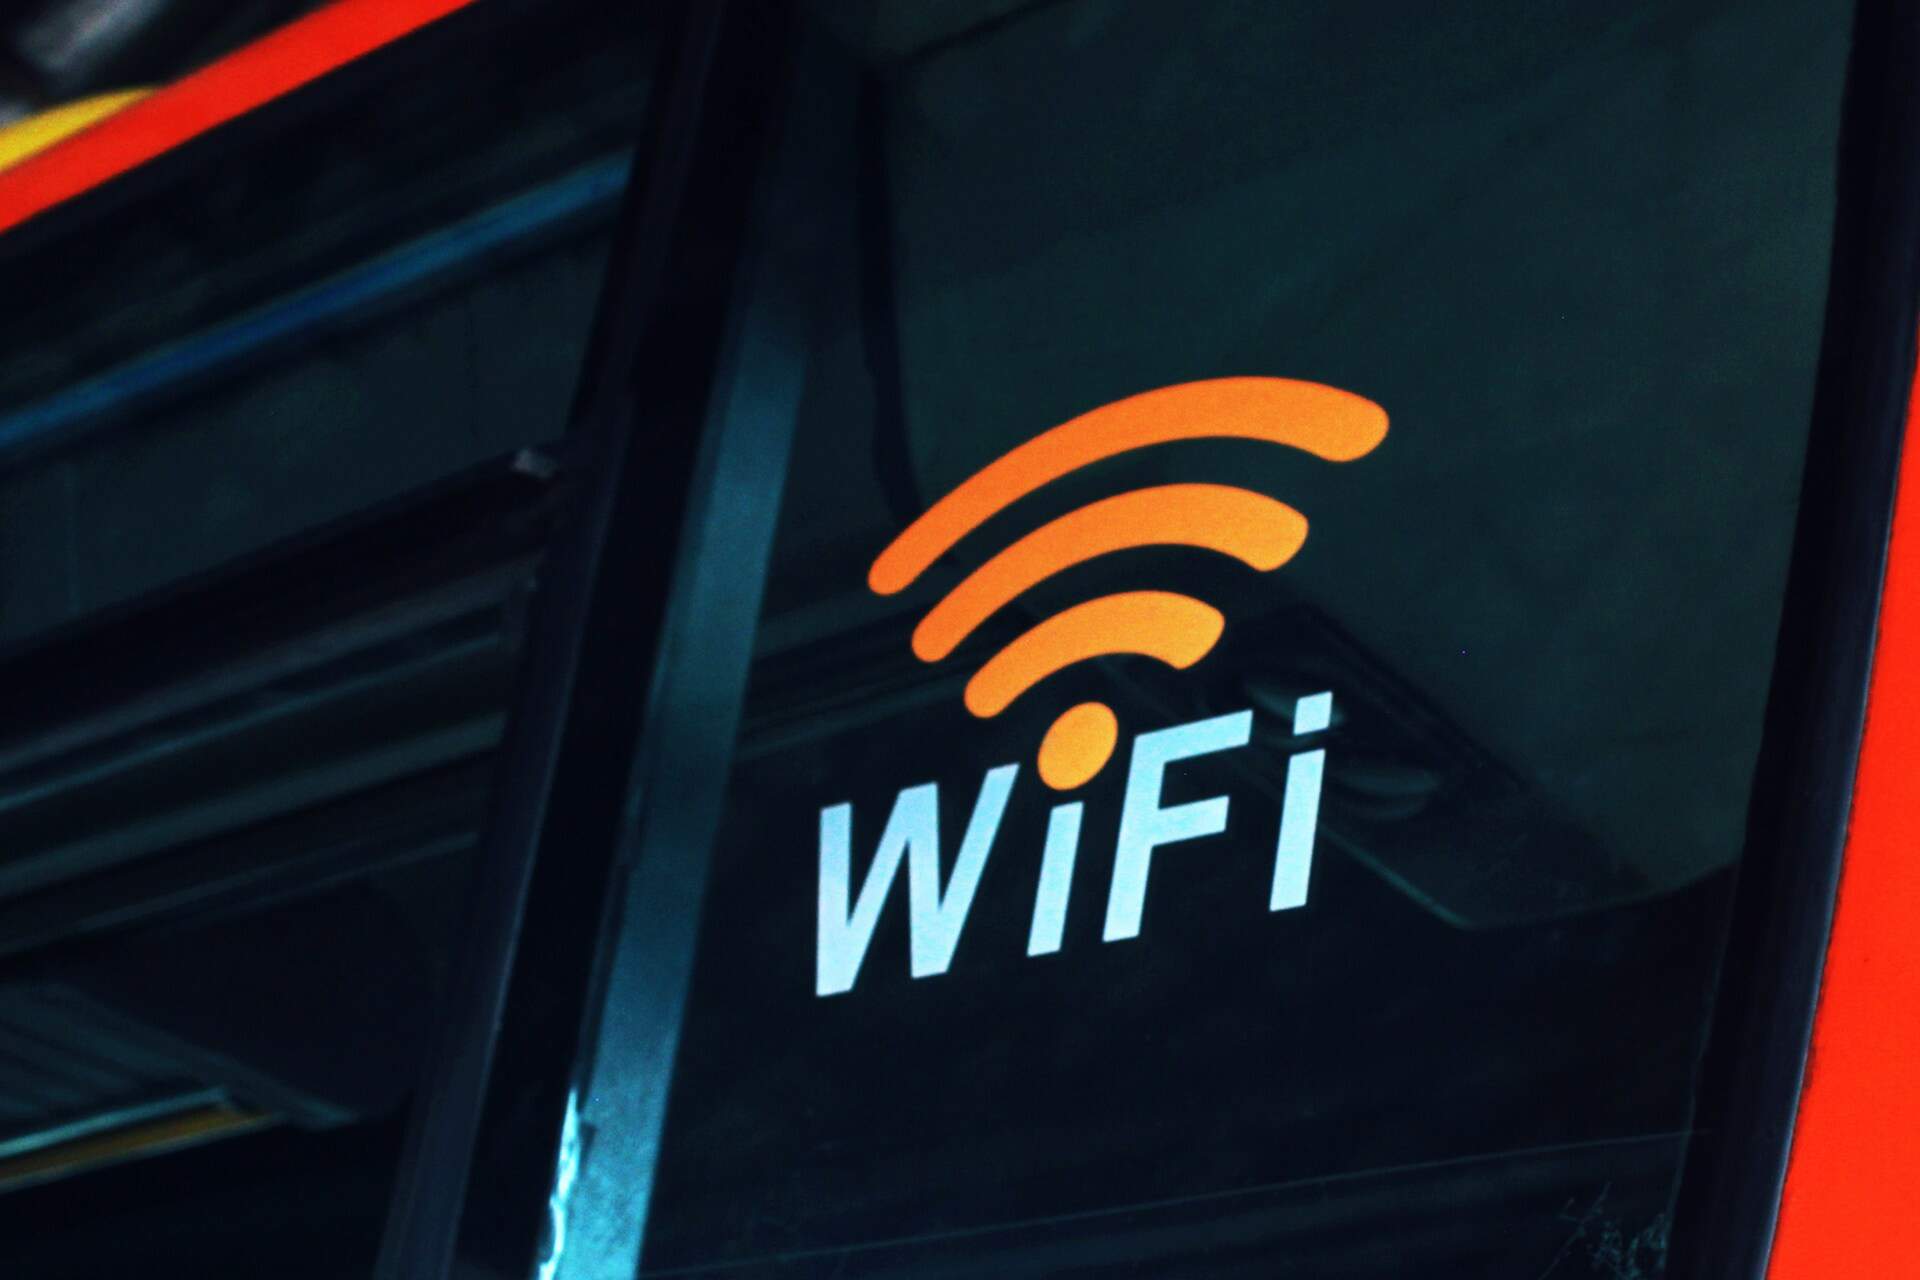   ,    Wi-Fi   